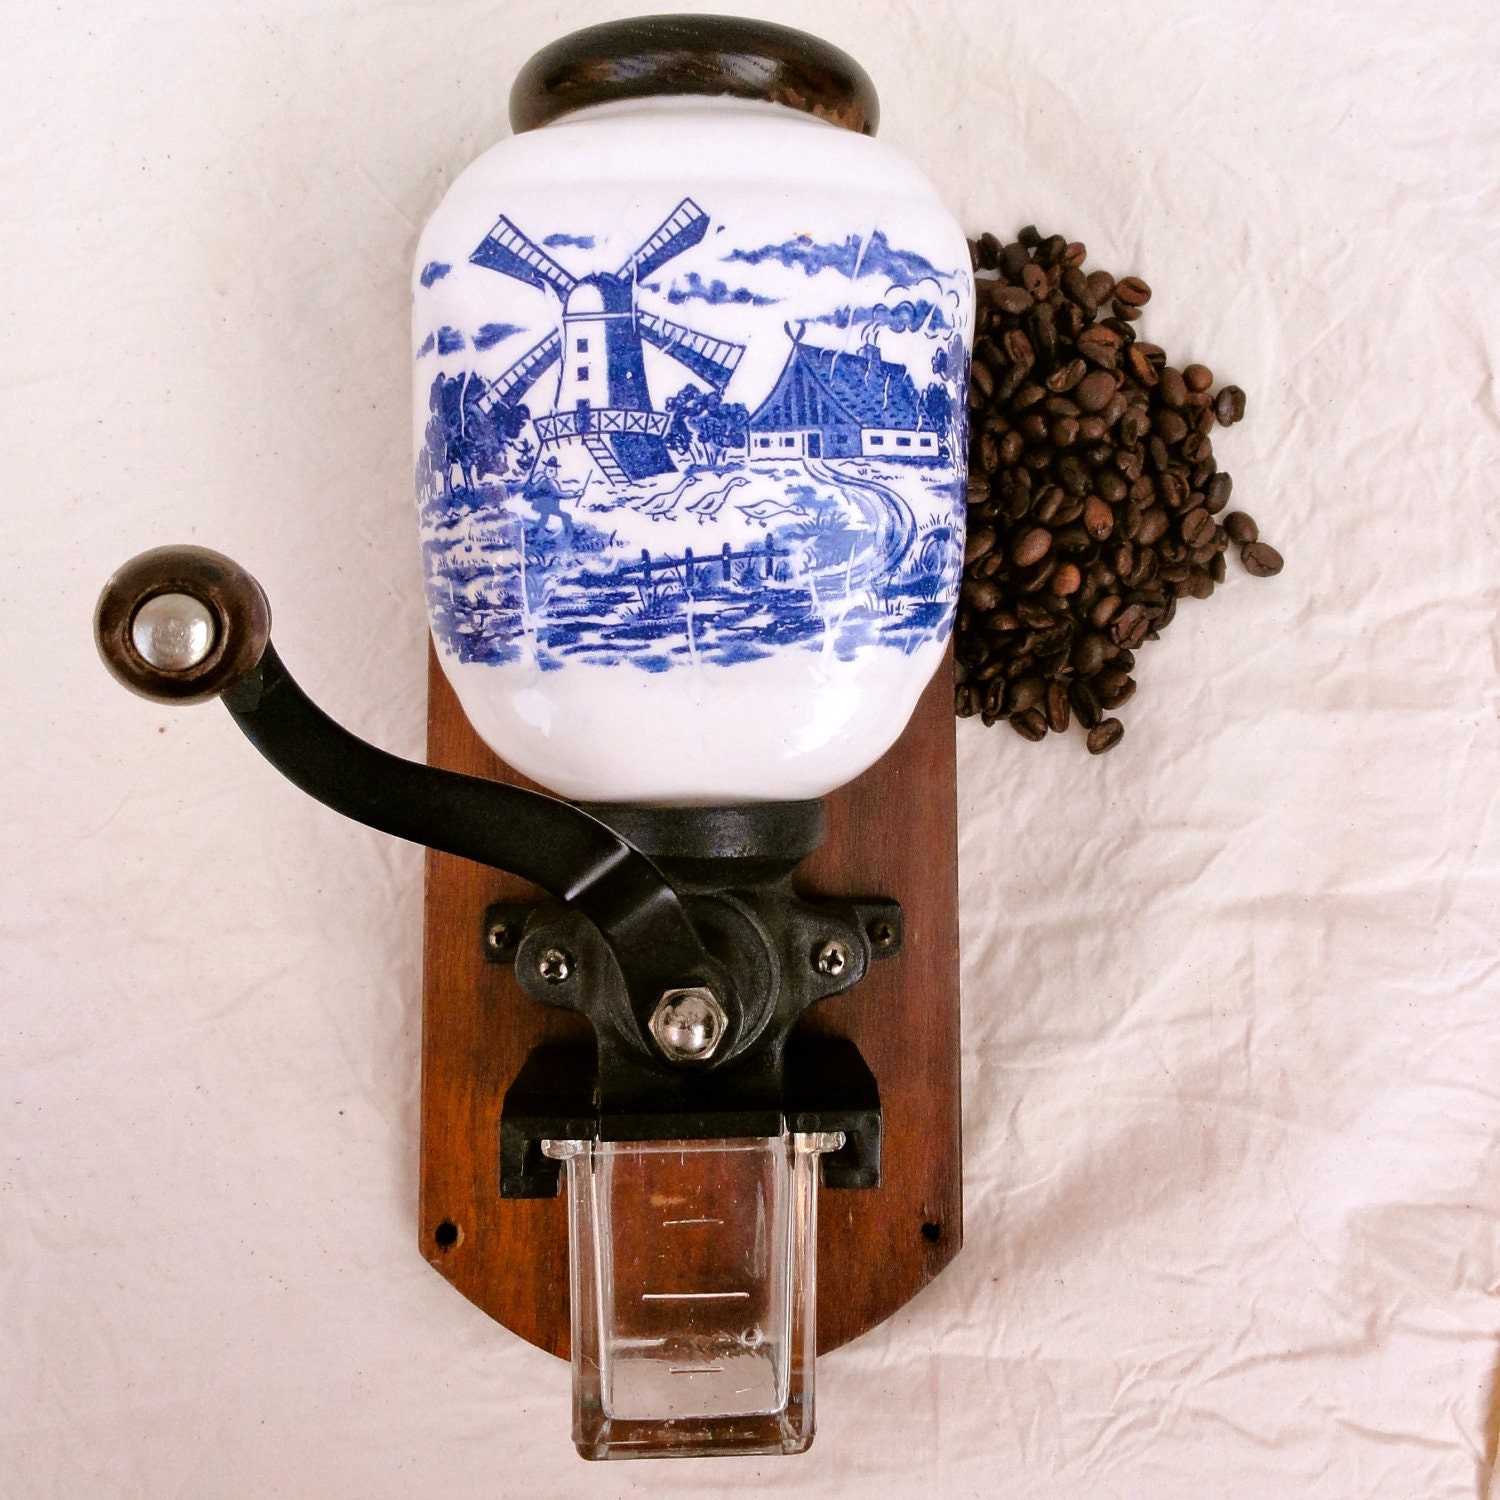 Vintage Coffee Grinder Wall Mount Dutch by oldamsterdam on Etsy